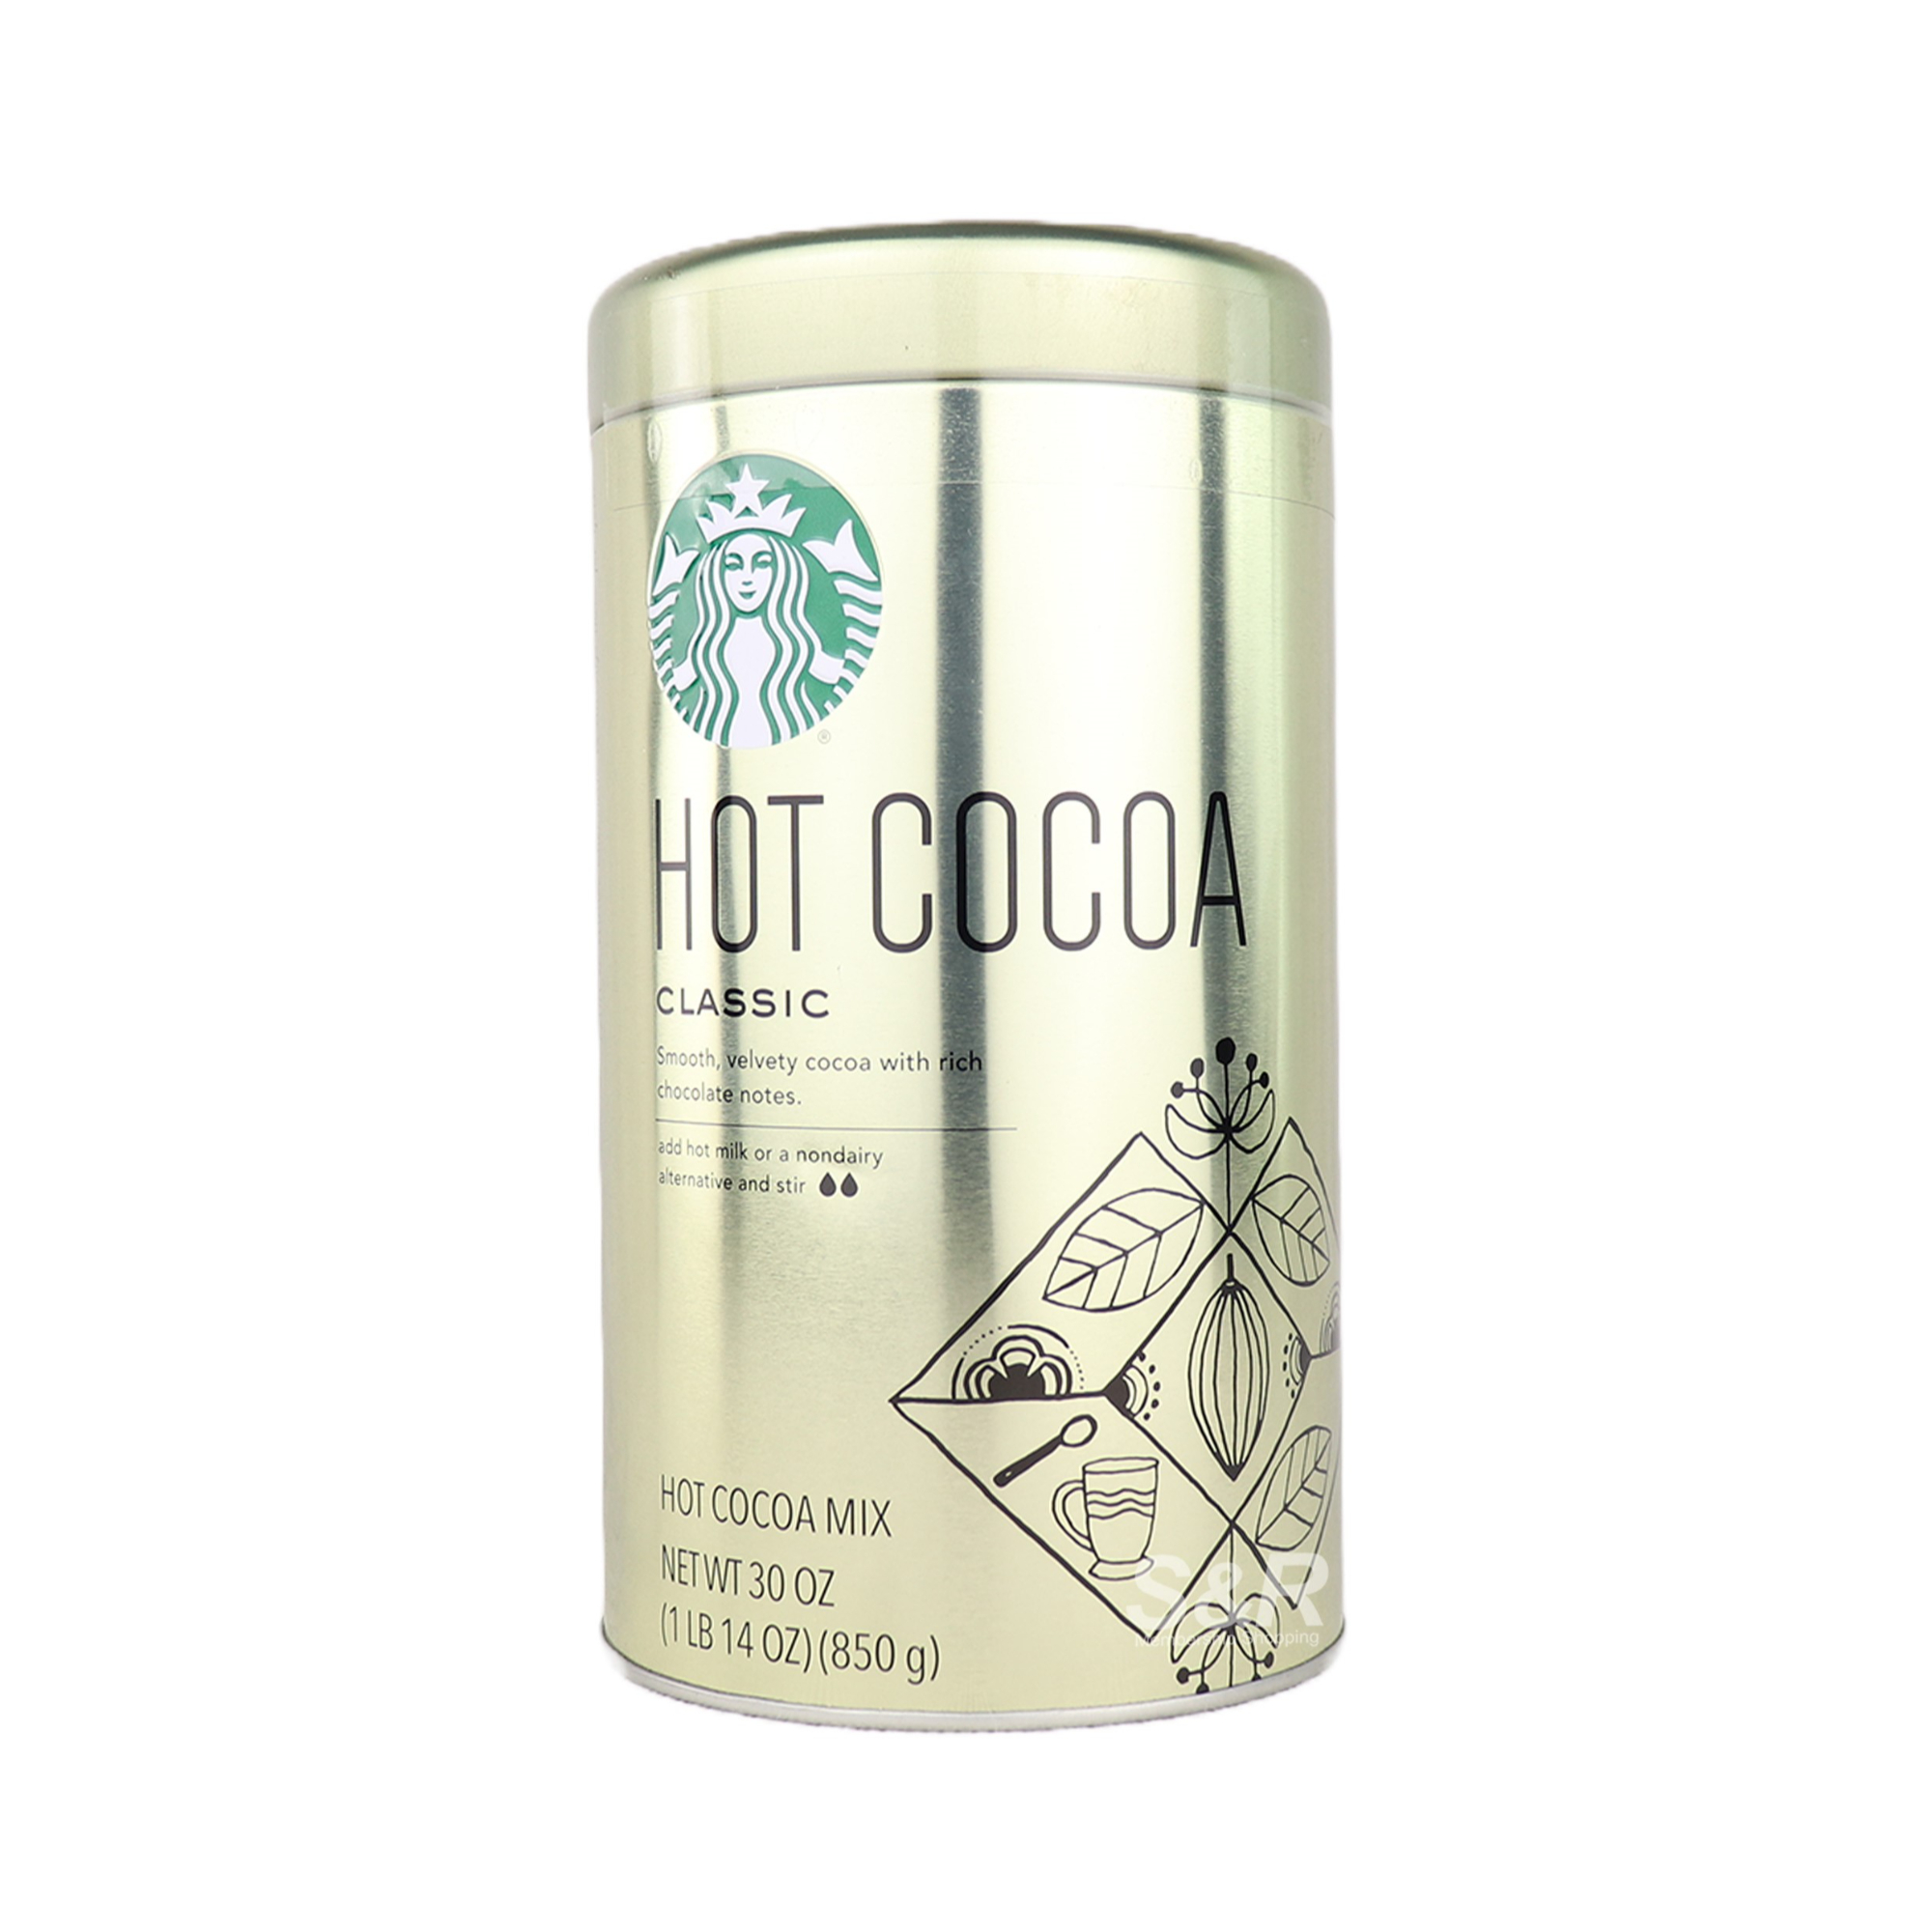 Starbucks Classic Hot Cocoa Mix 850g